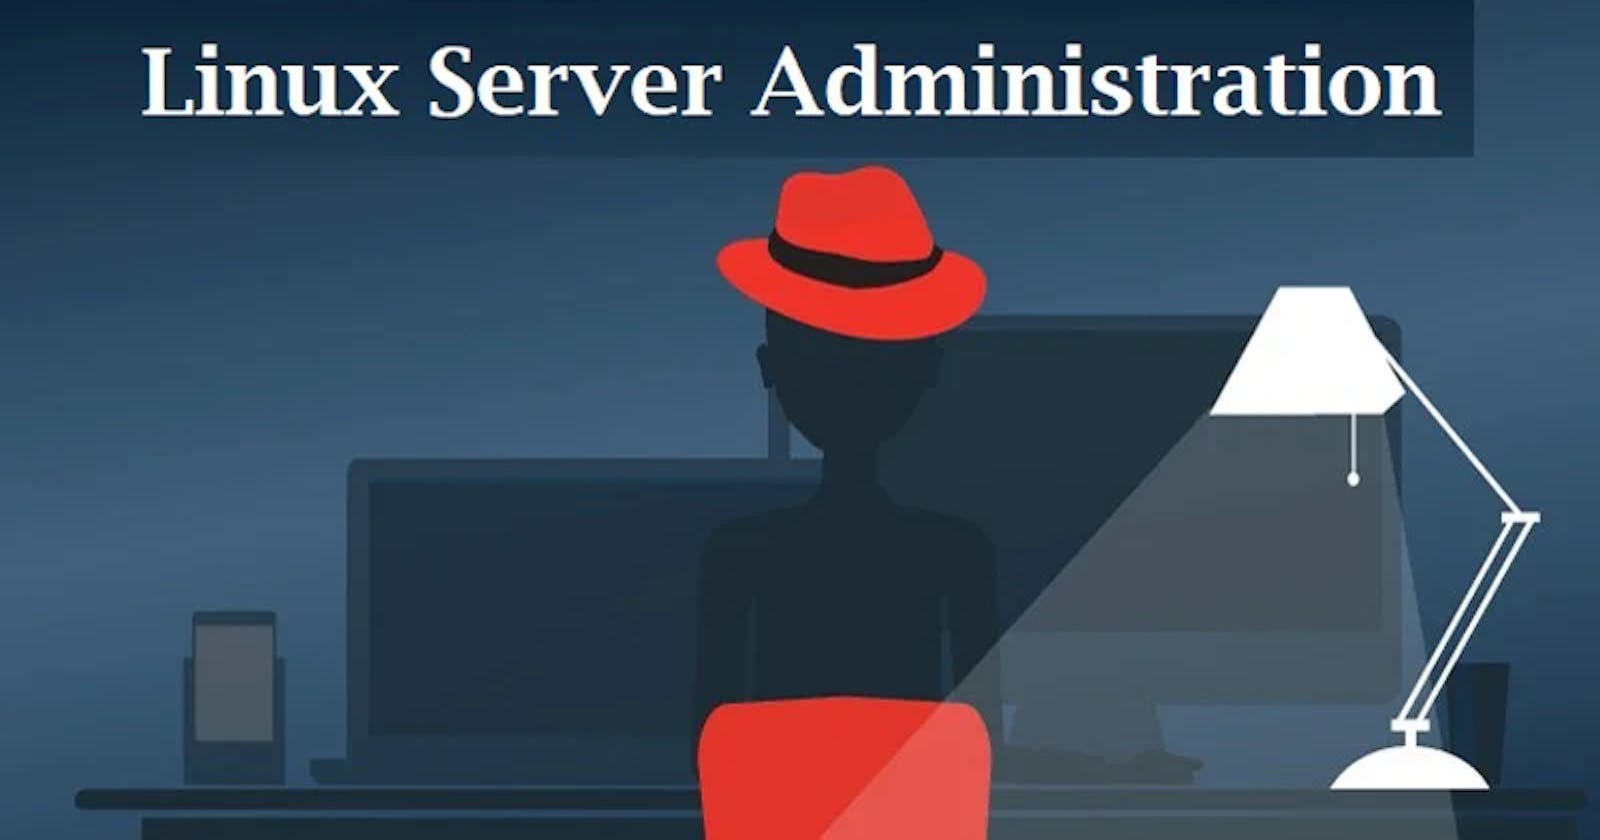 "Maximizing Performance through Linux Server Administration"